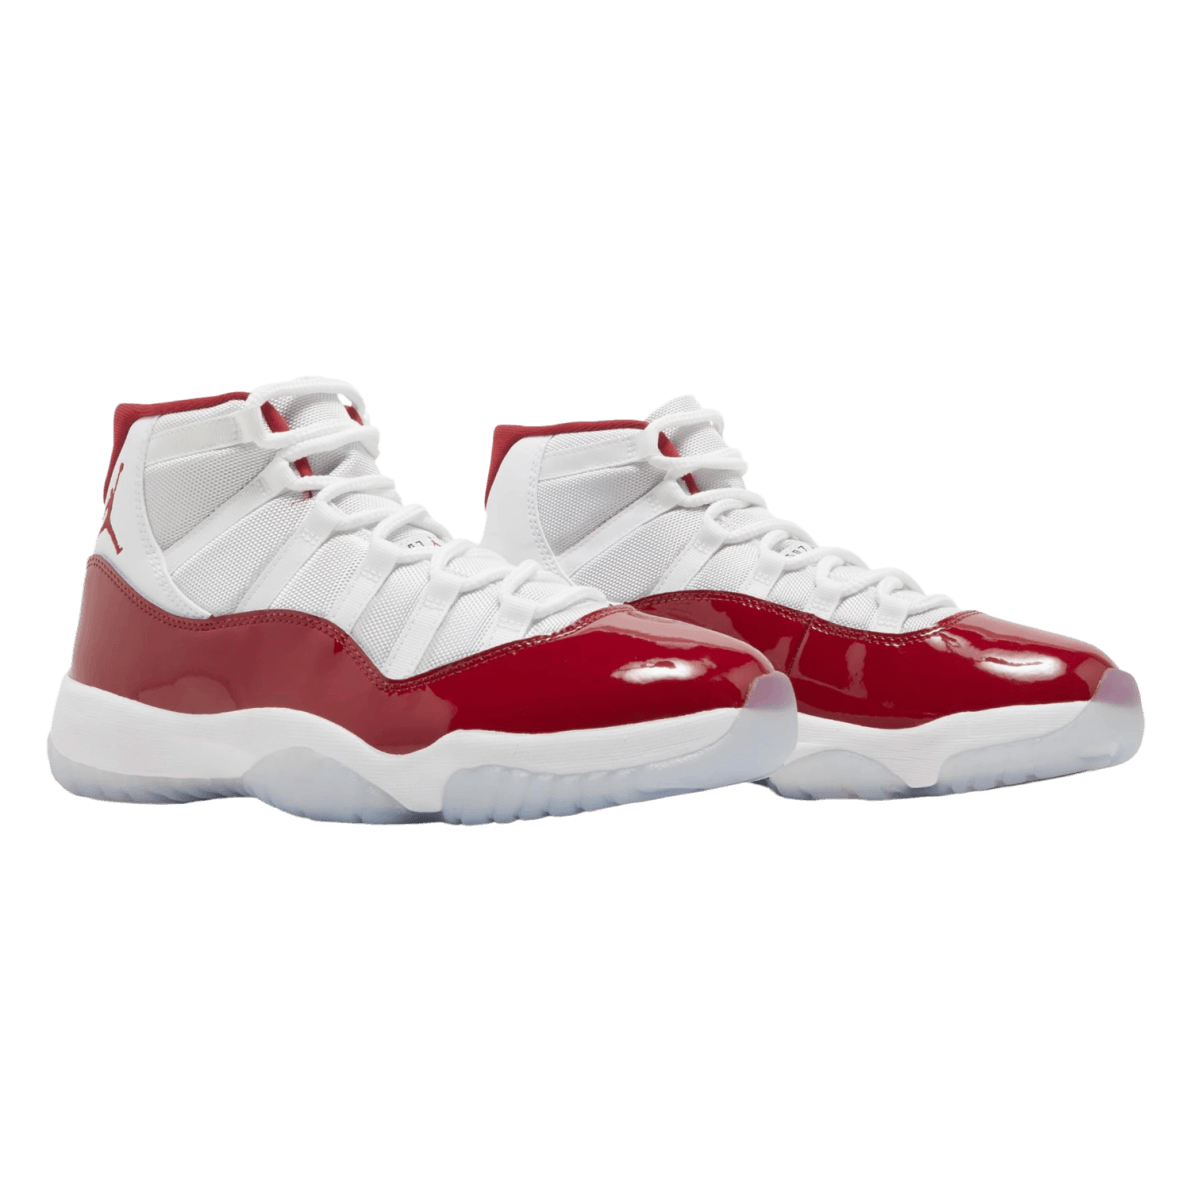 Air Jordan 11 Retro 'Cherry' - Pre School - High Sneaker - Jordan - Jawns on Fire